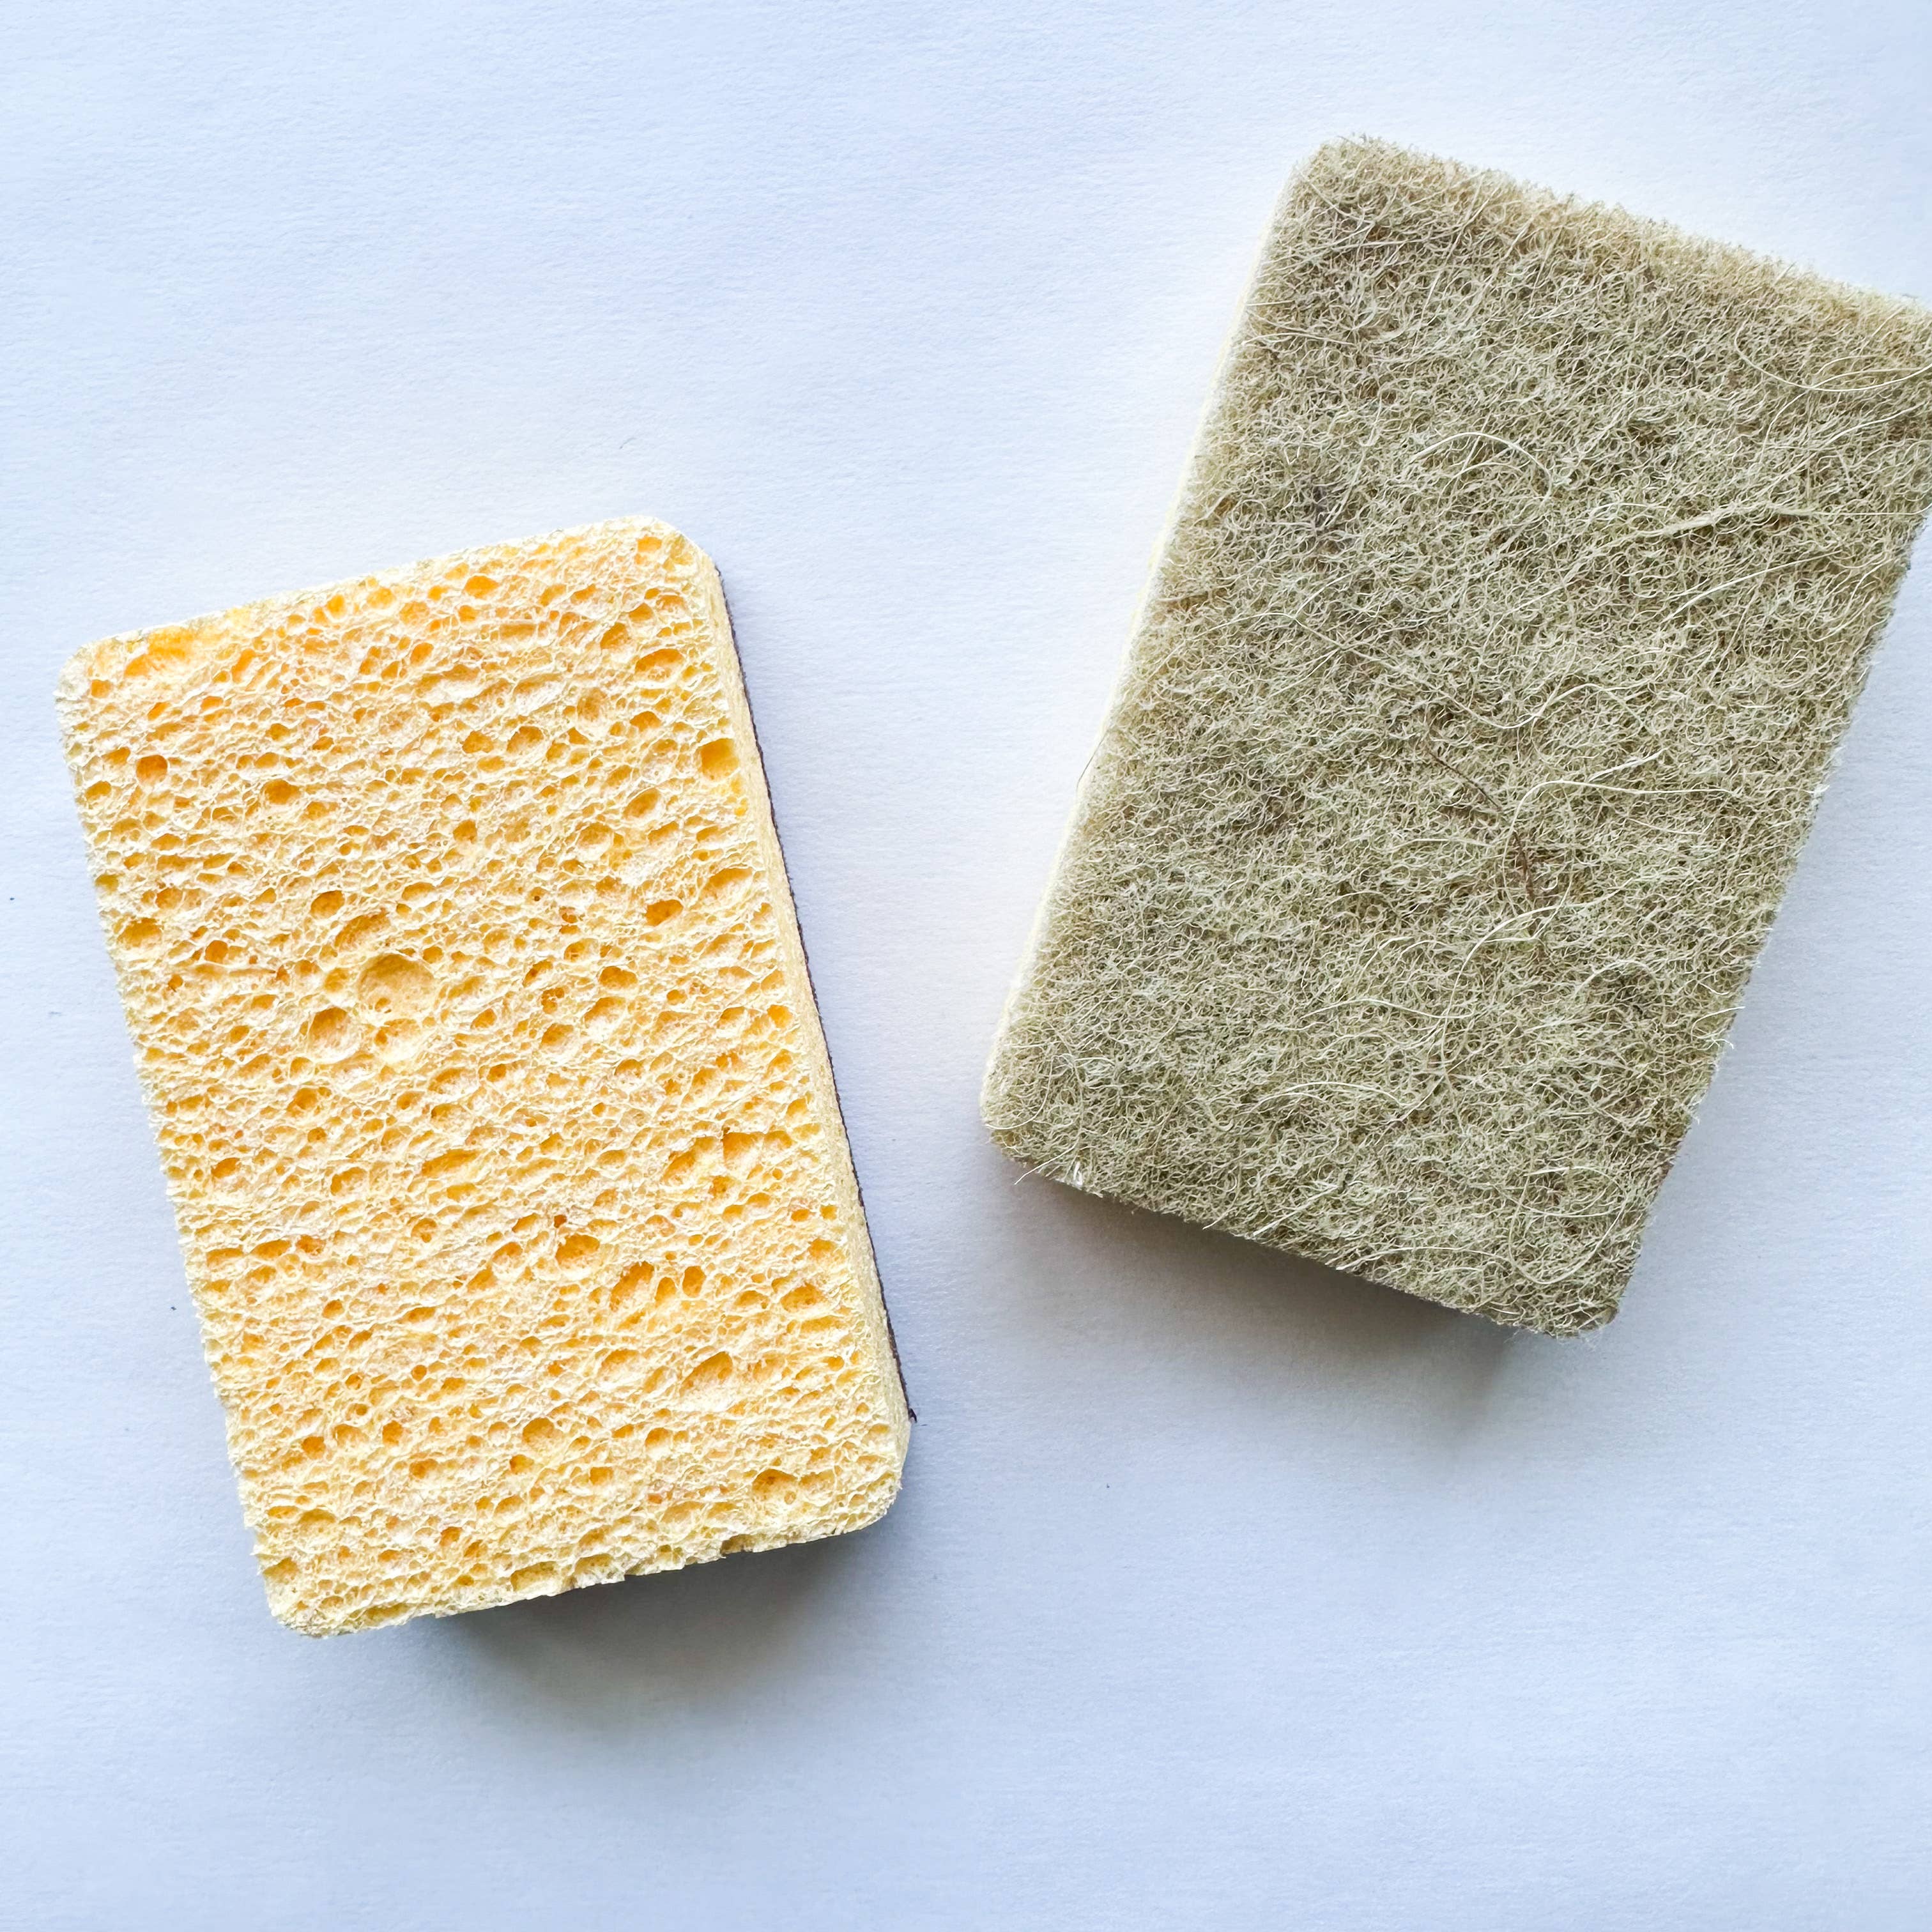 Natural Plastic Free Coconut Husk / Sisal & Cellulose Sponge